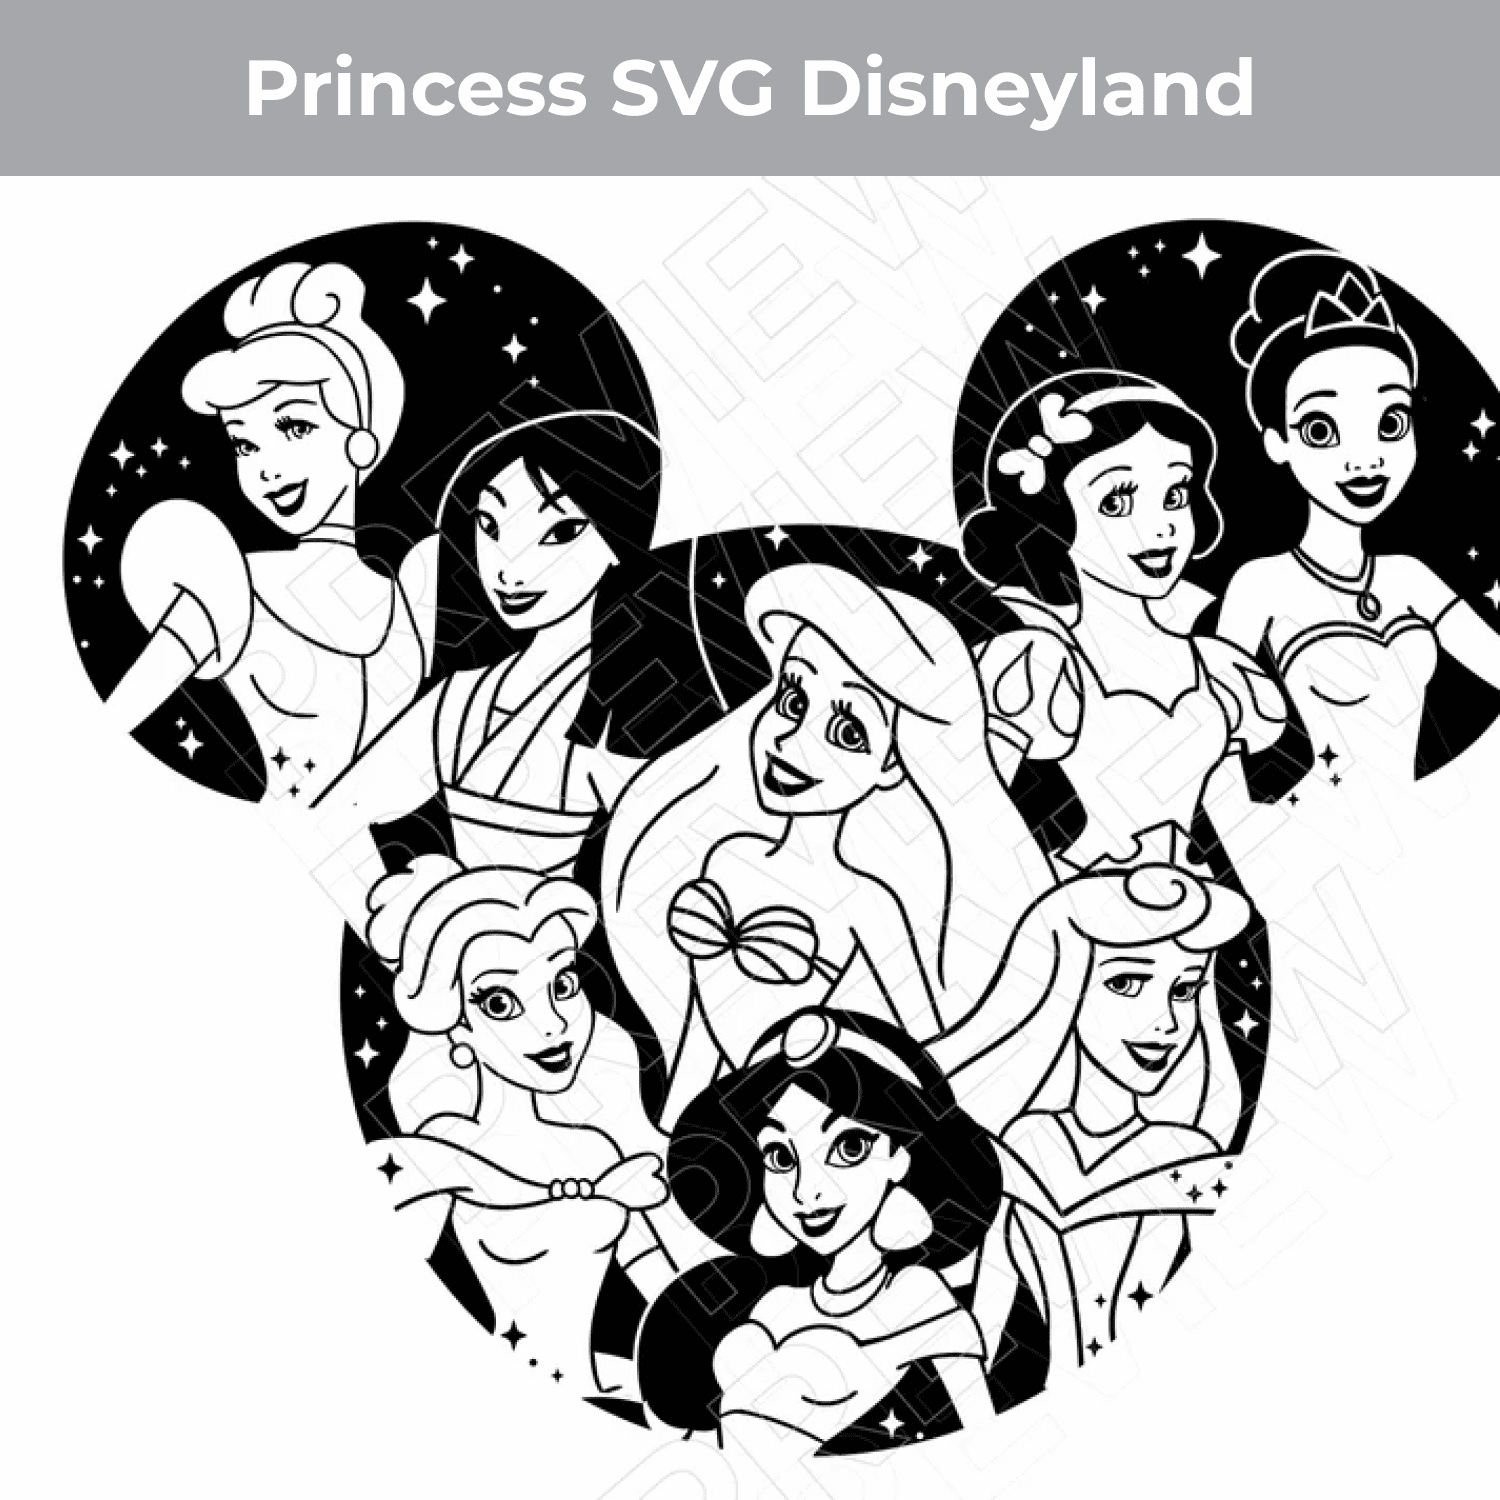 Princess SVG Disneyland ears png clipart.